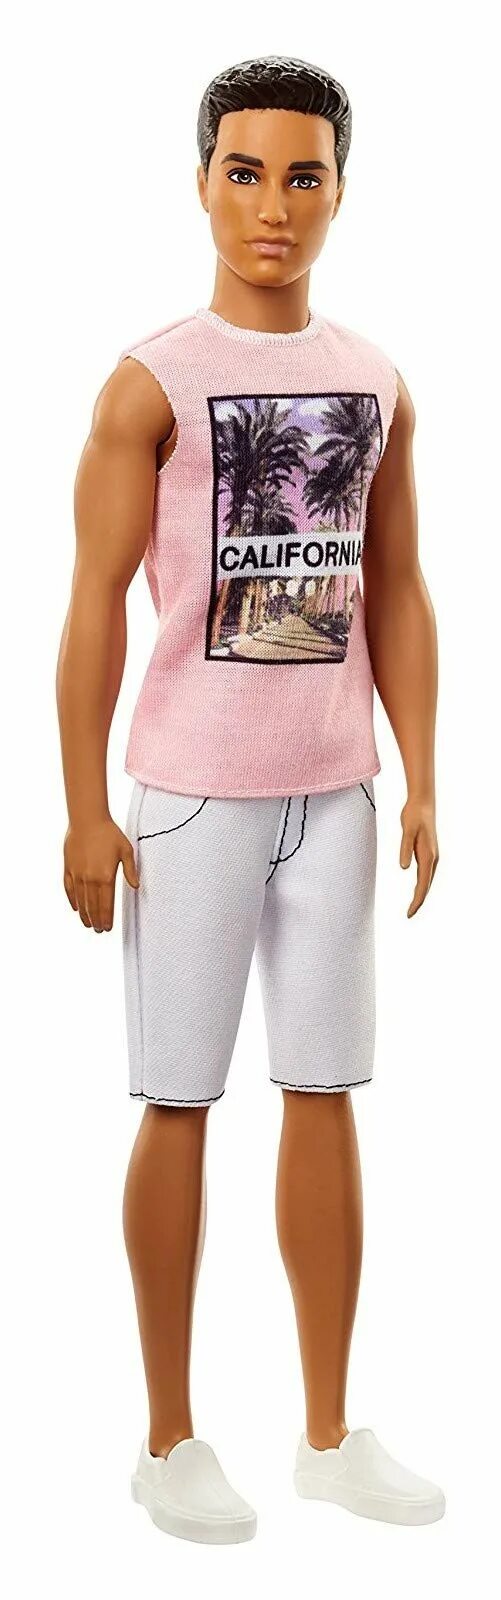 Кукла Кен Fashionistas. Dwk44 игрушка Barbie Ken игра с модой в асс. Barbie Fashionistas Кен. Кукла Кен Маттел Mattel Barbie Ryan Fashionistas.